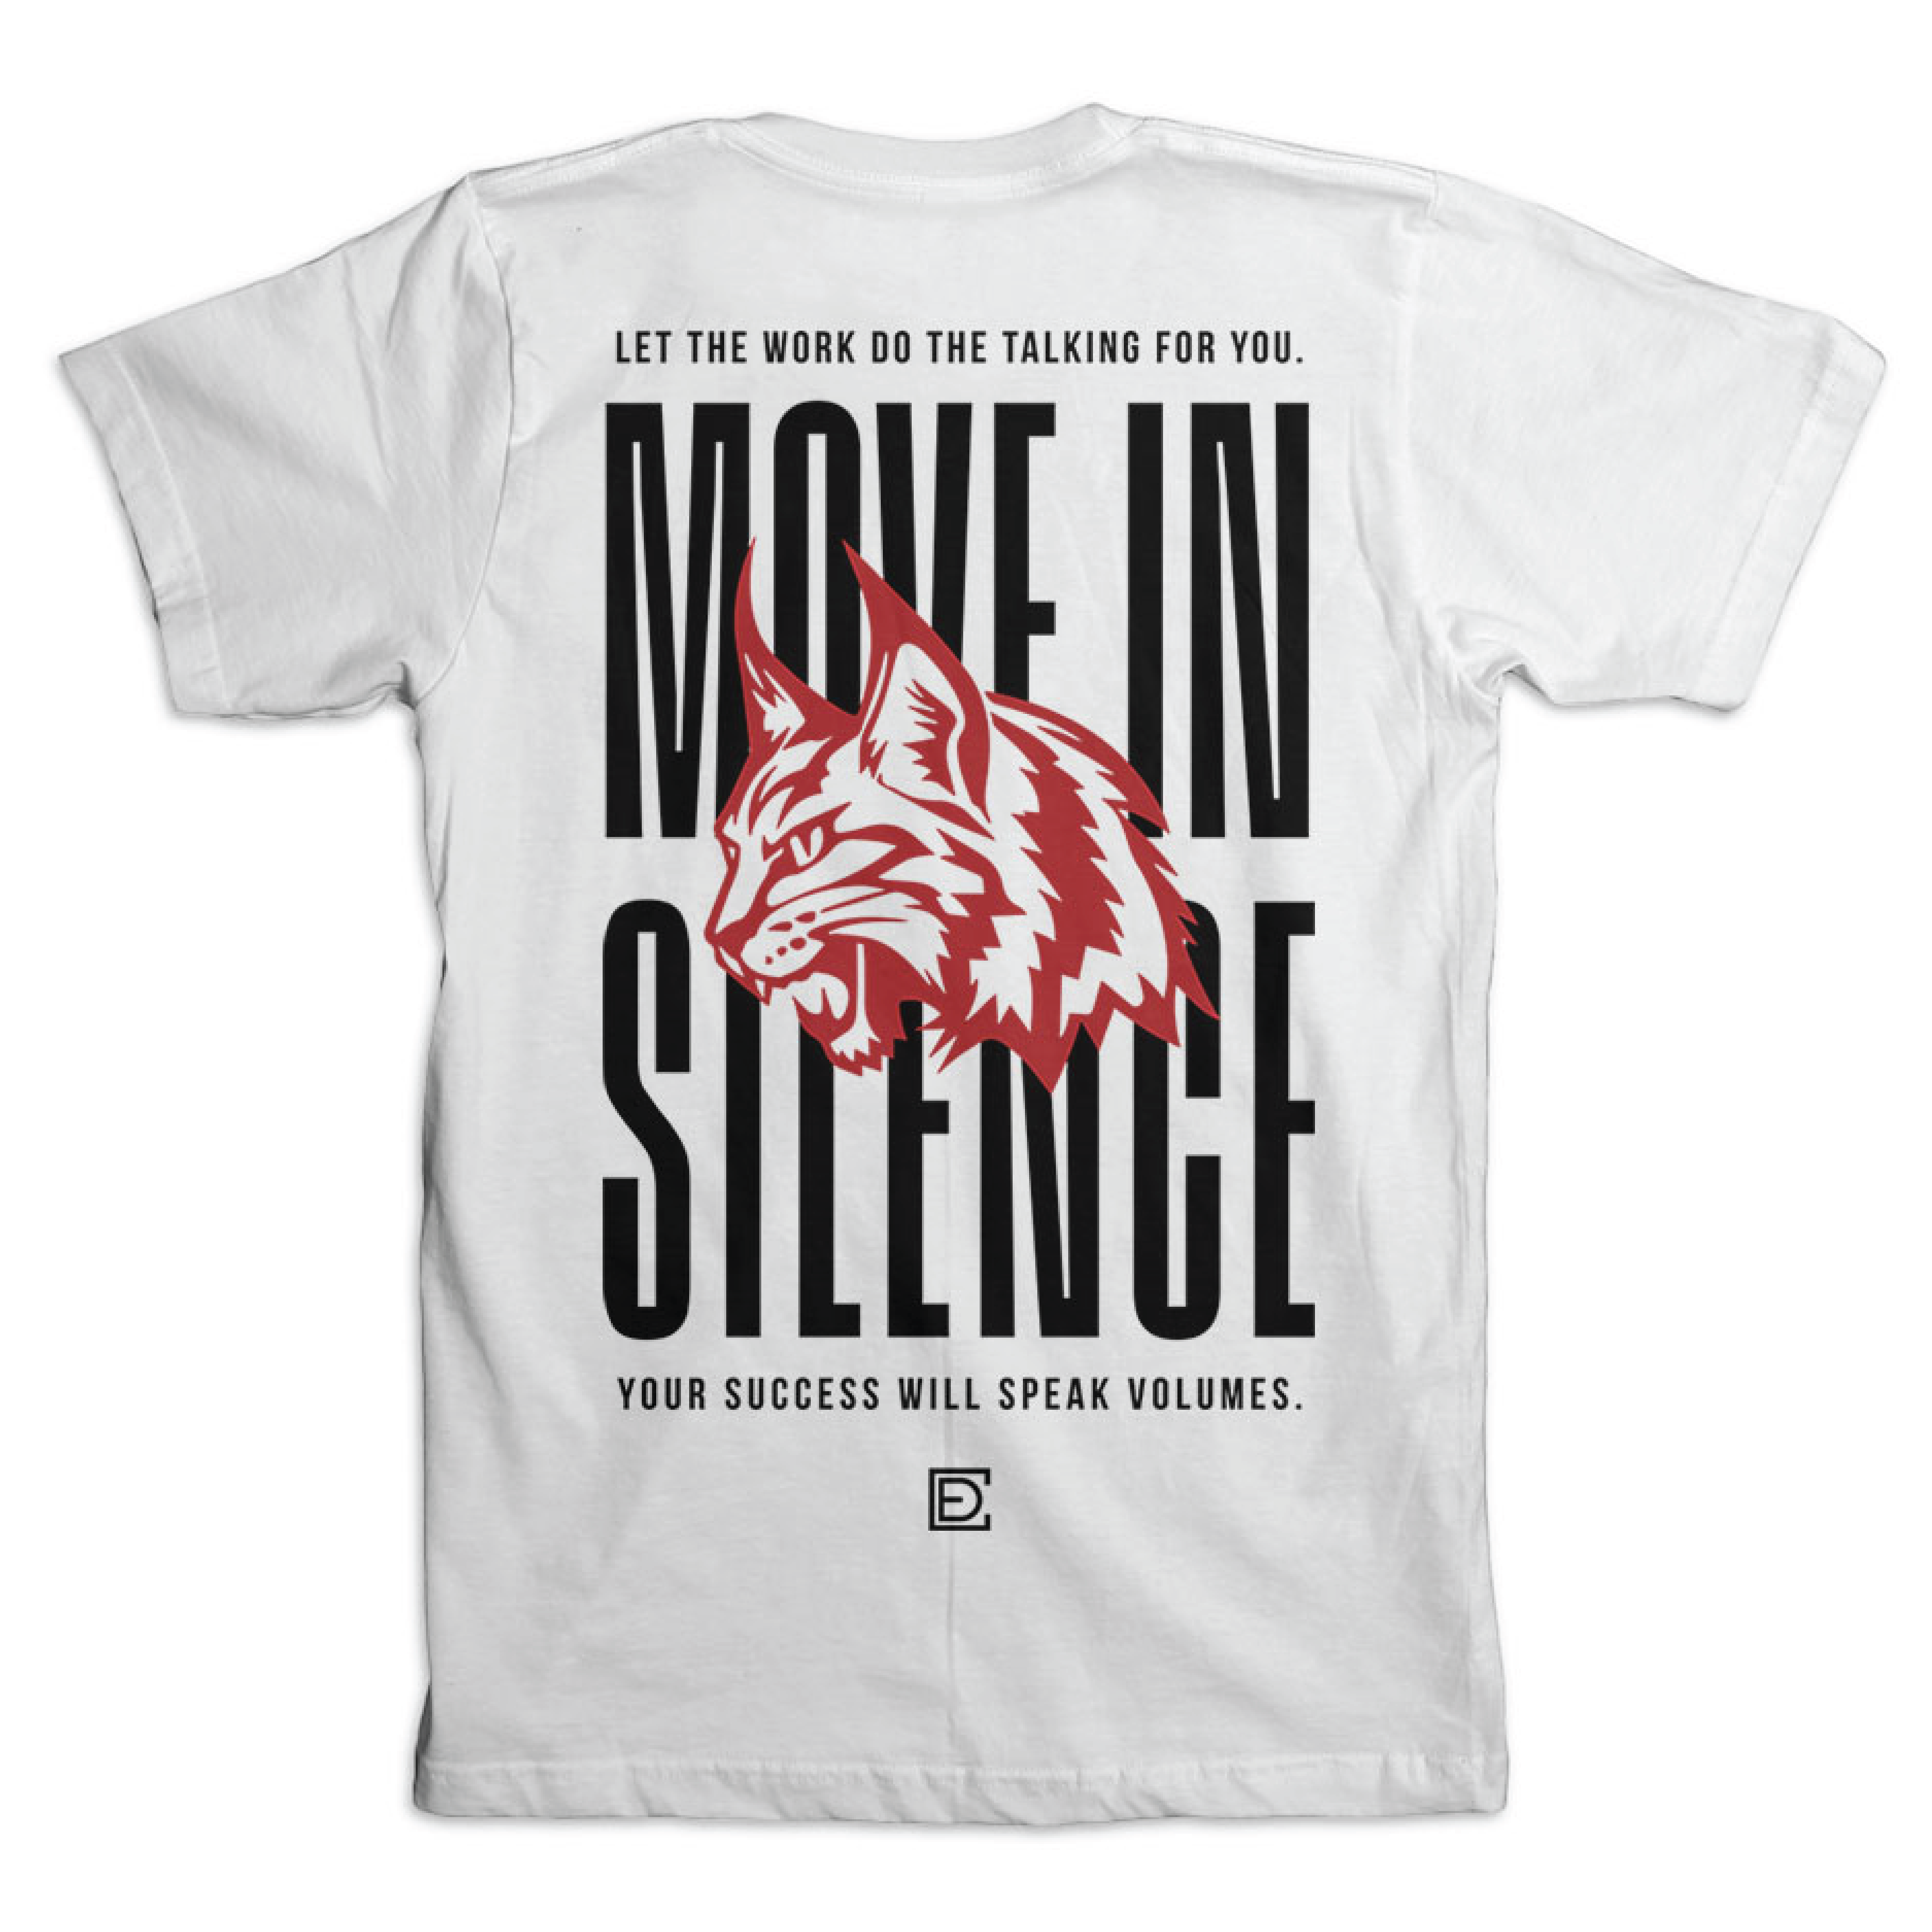 Move in Silence men's white shirt